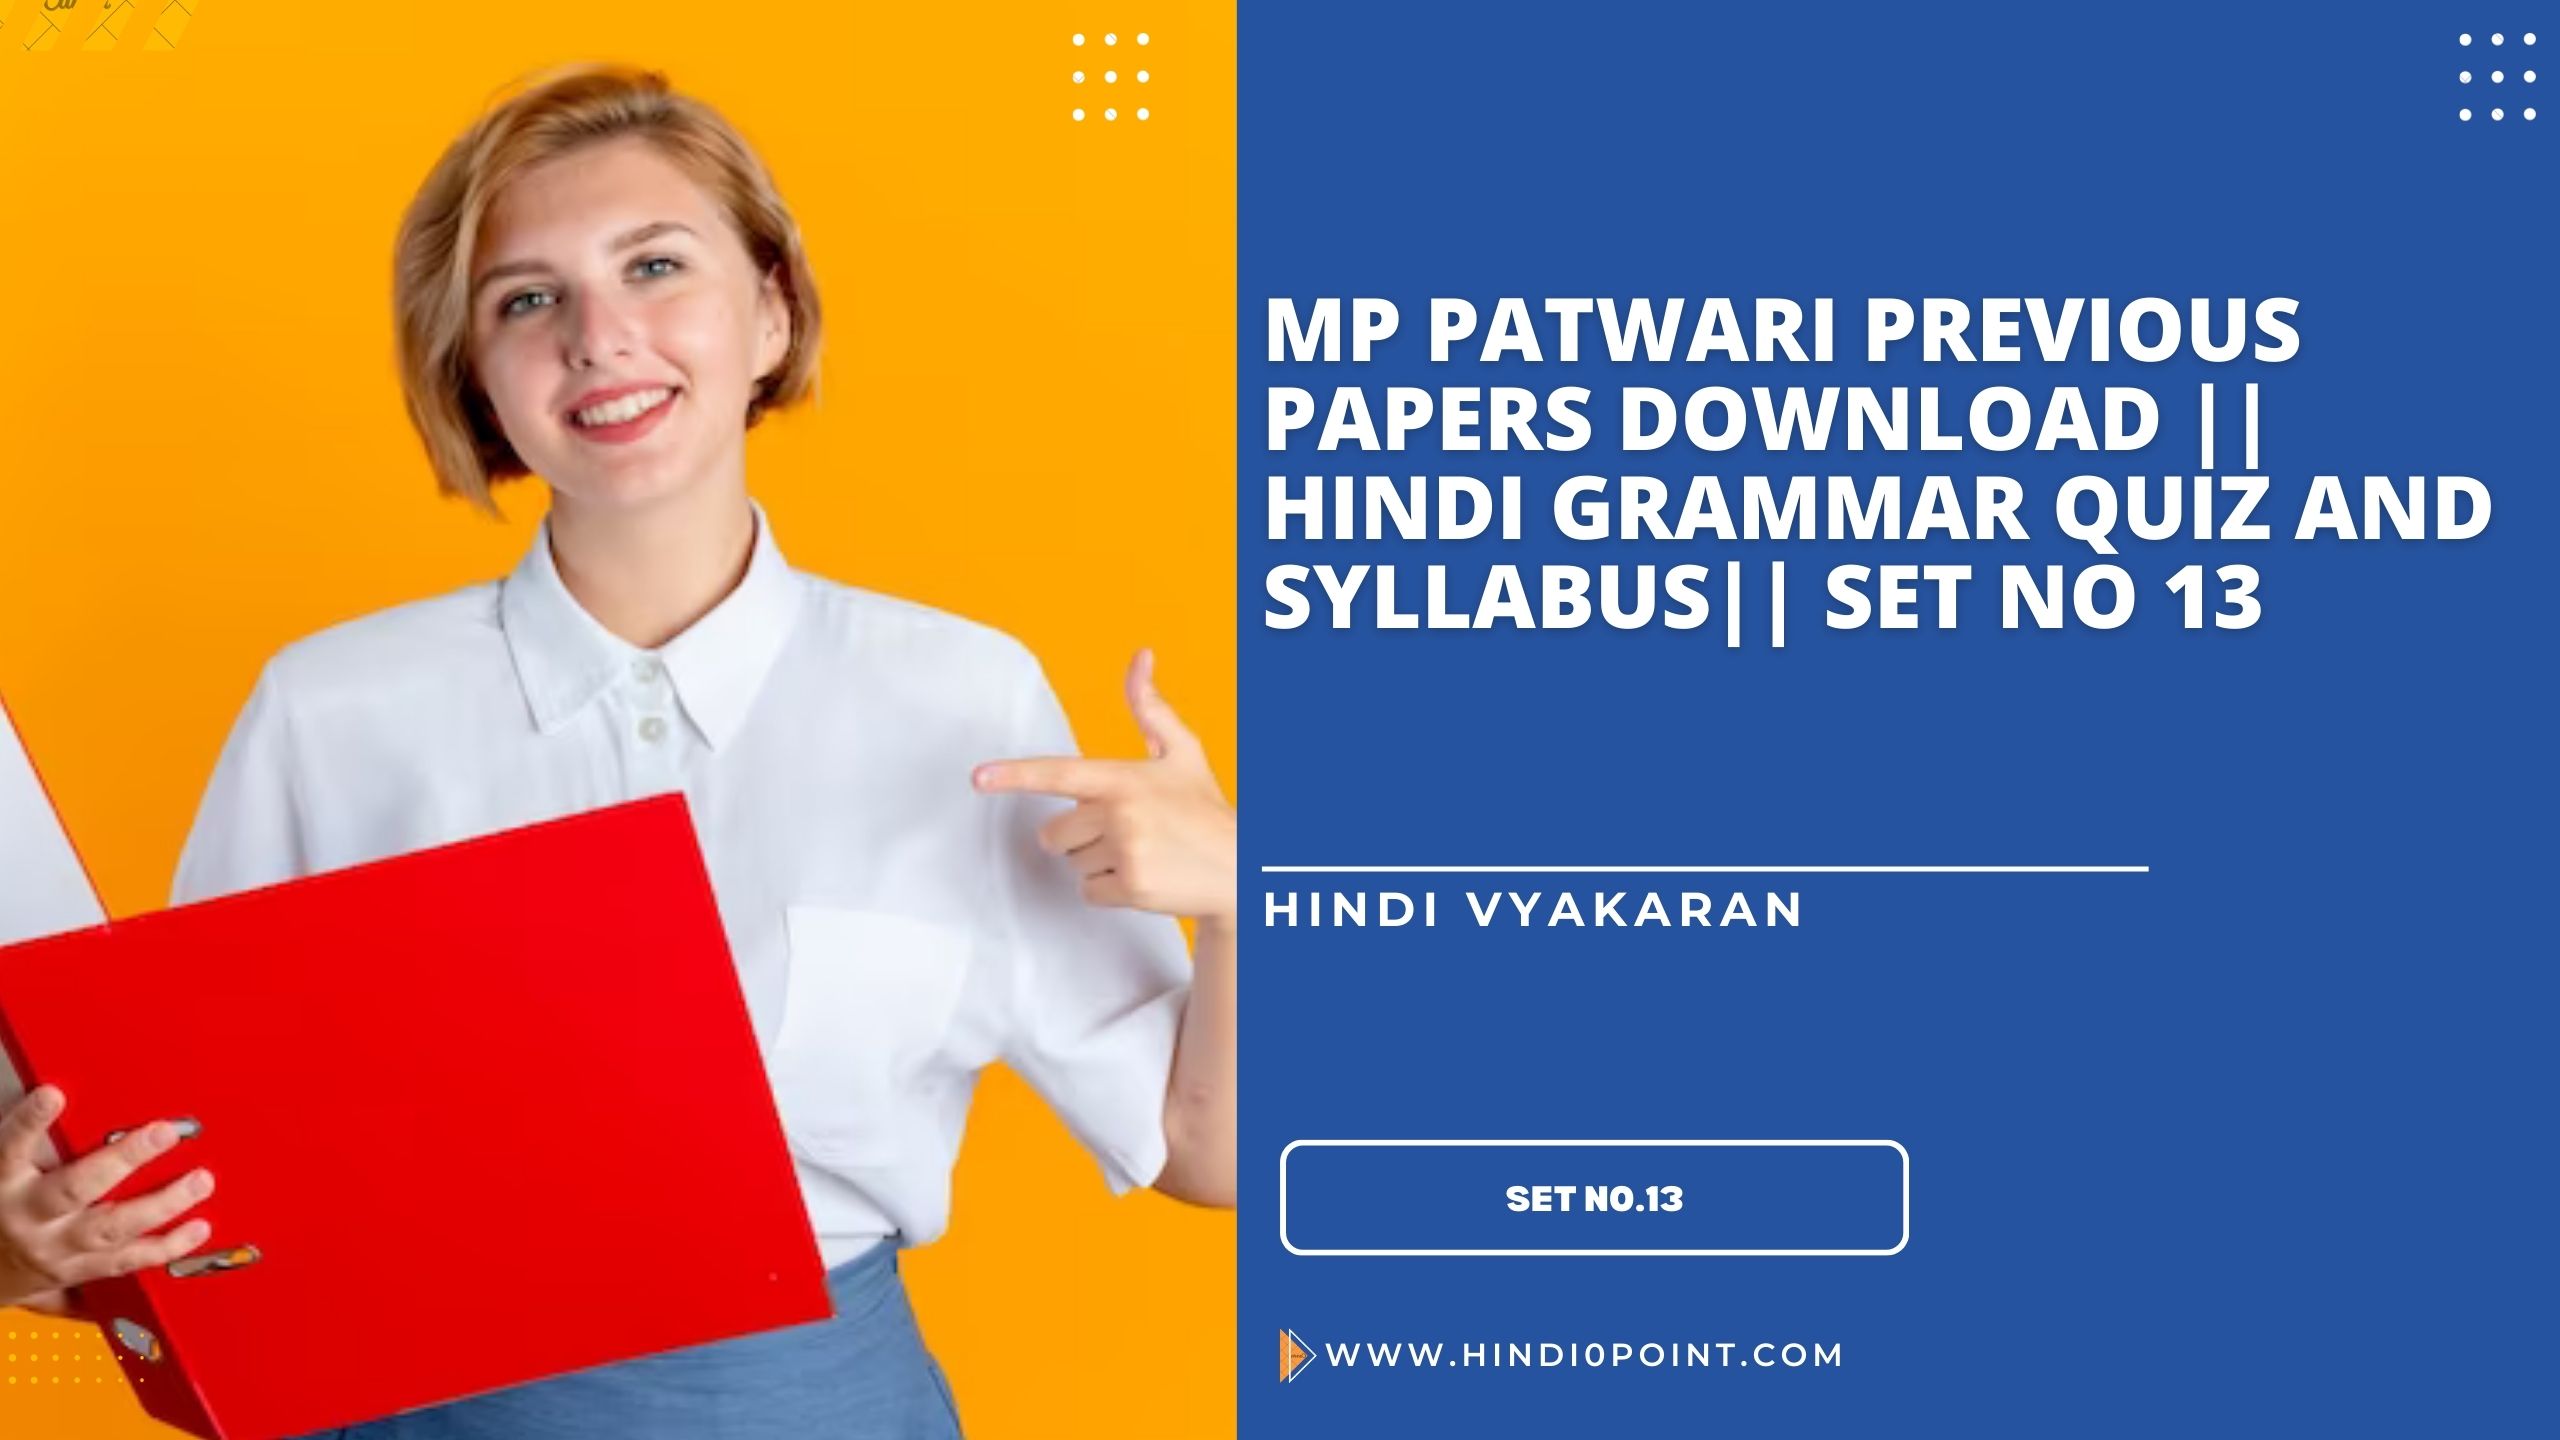 Mp patwari previous papers download || hindi grammar quiz and syllabus|| set no 13